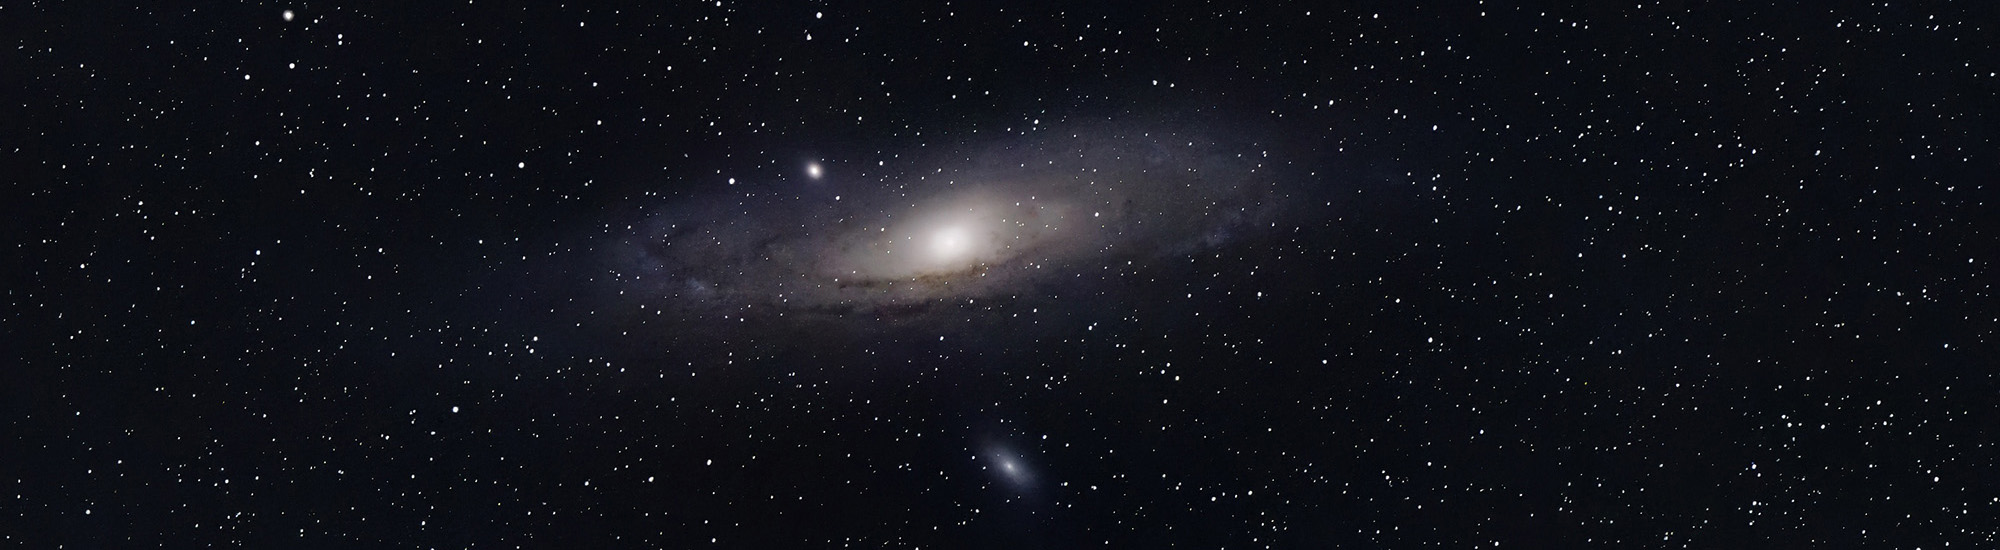 Andromeda-Galaxie mit Sony Alpha 6400, Samyang 135mm f/2 und Star Adventurer 2i.